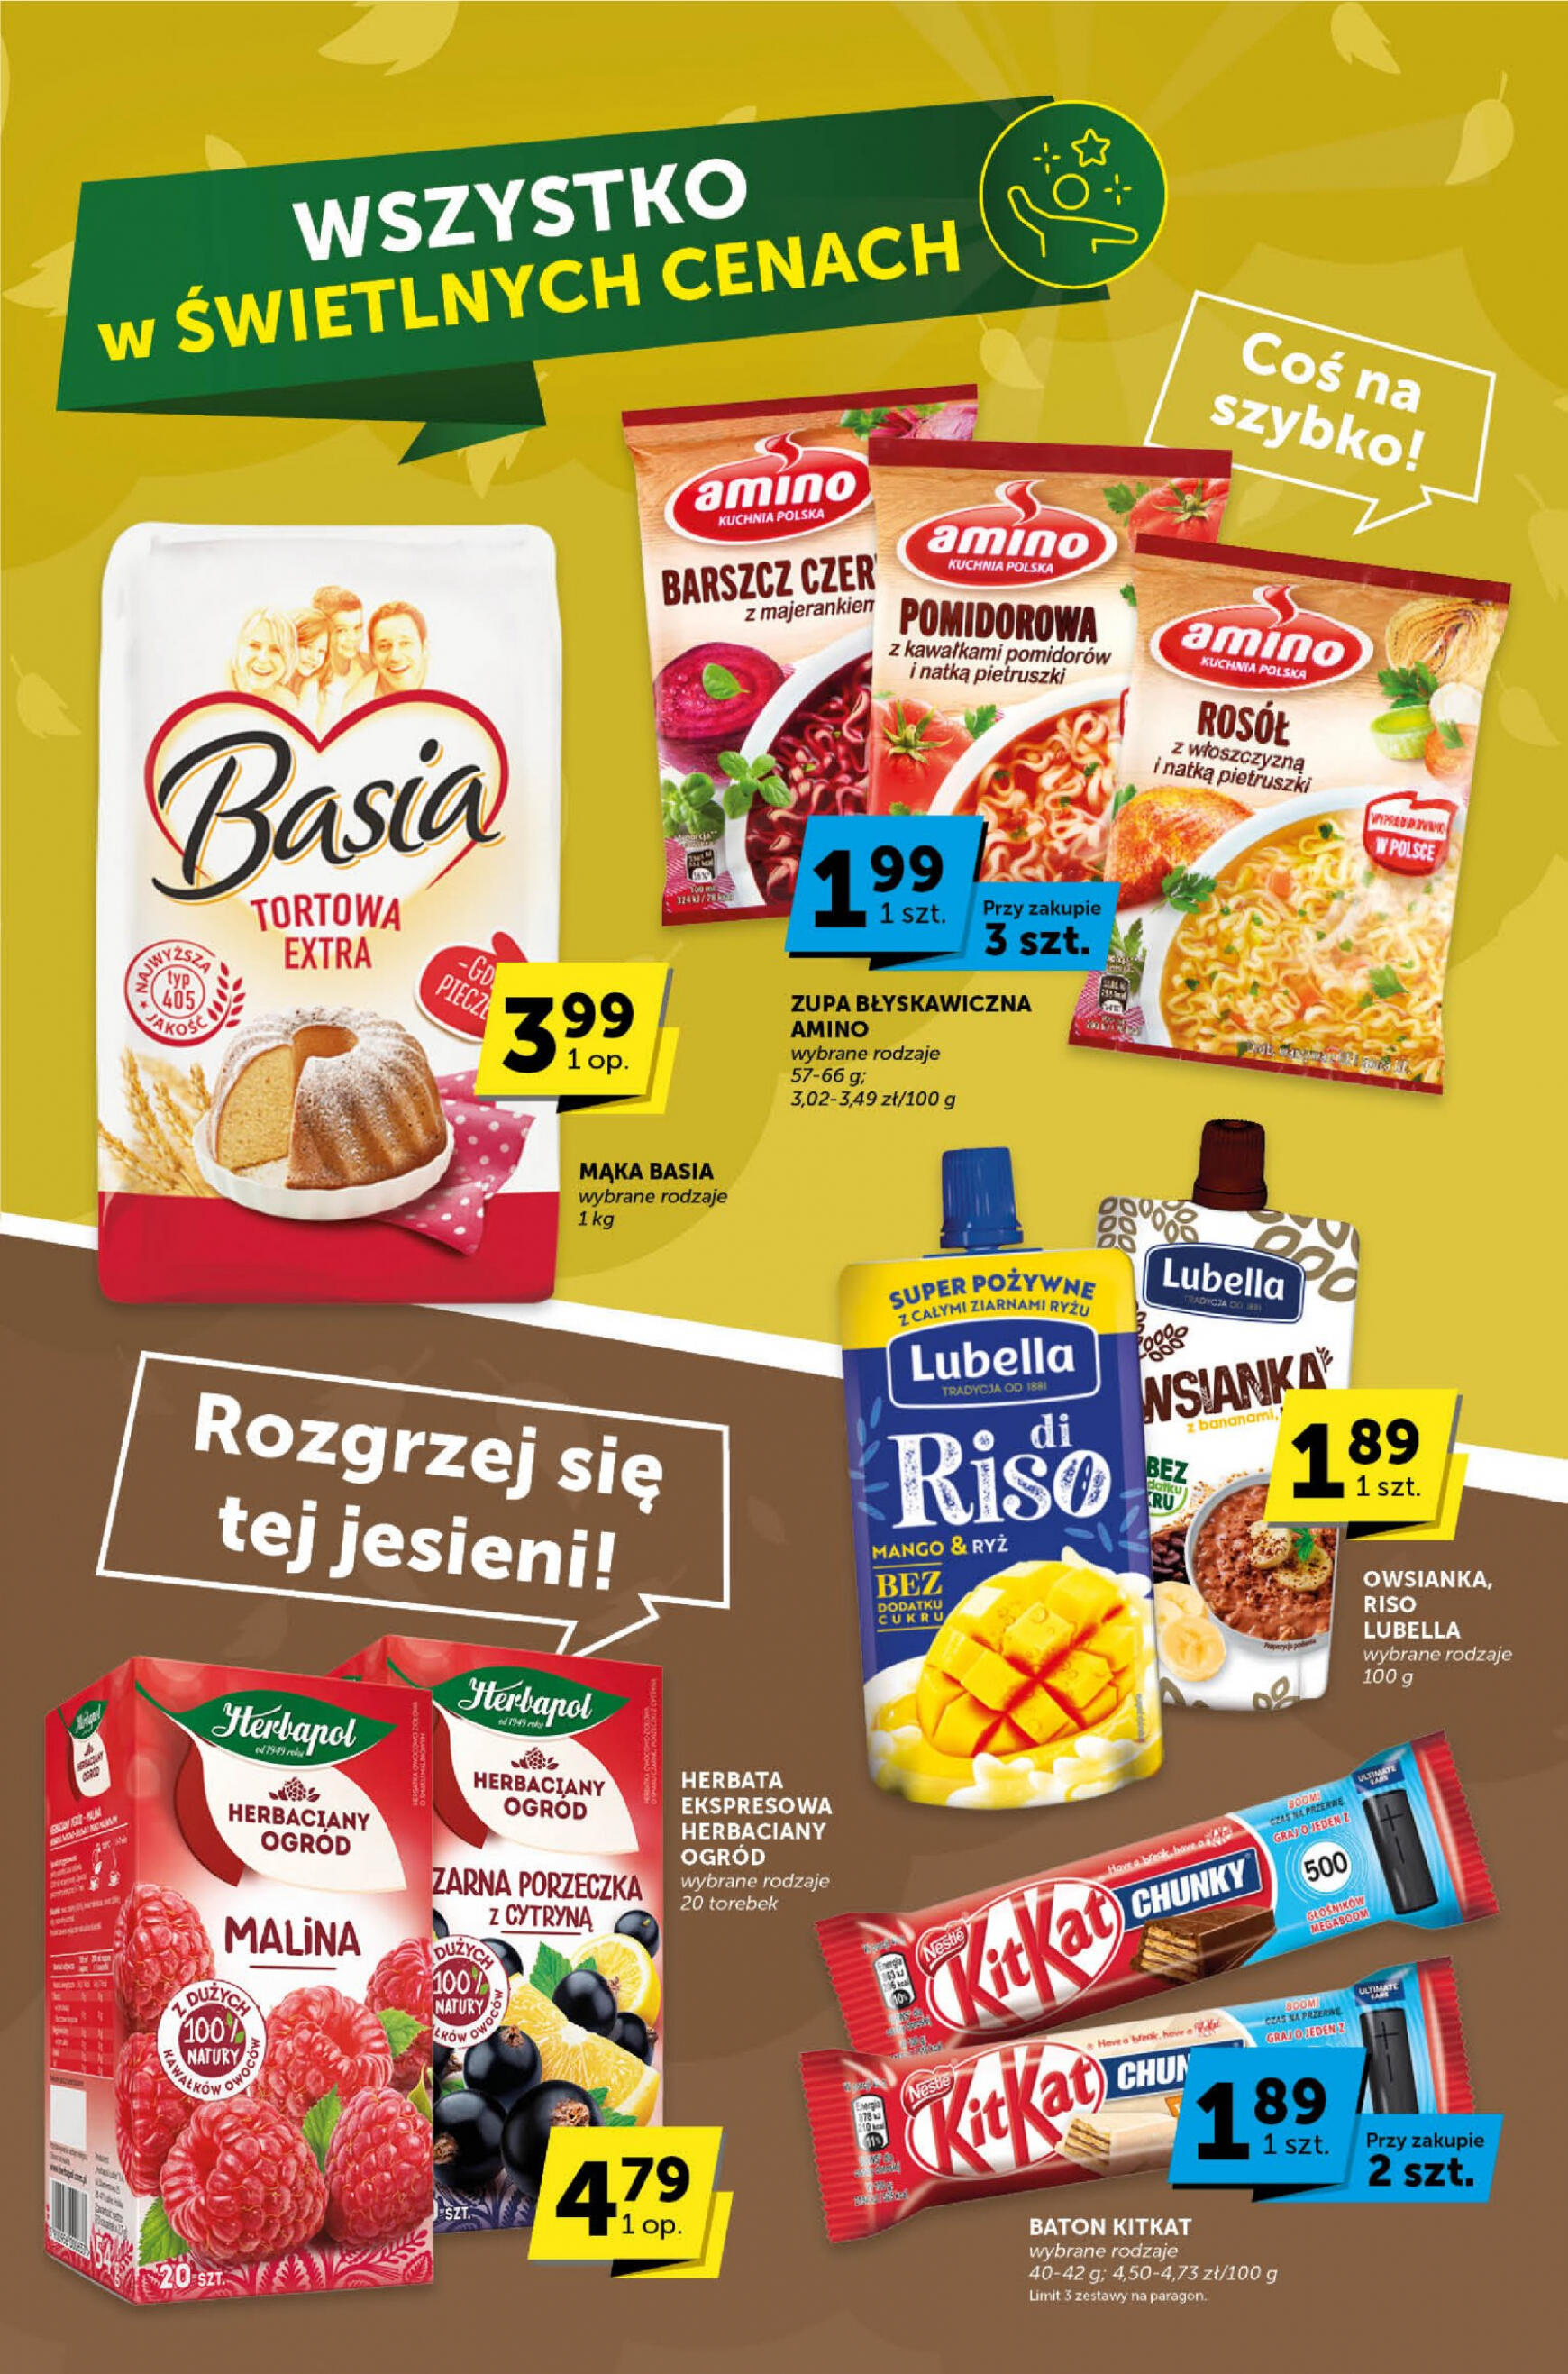 groszek - Groszek Minimarket - page: 3